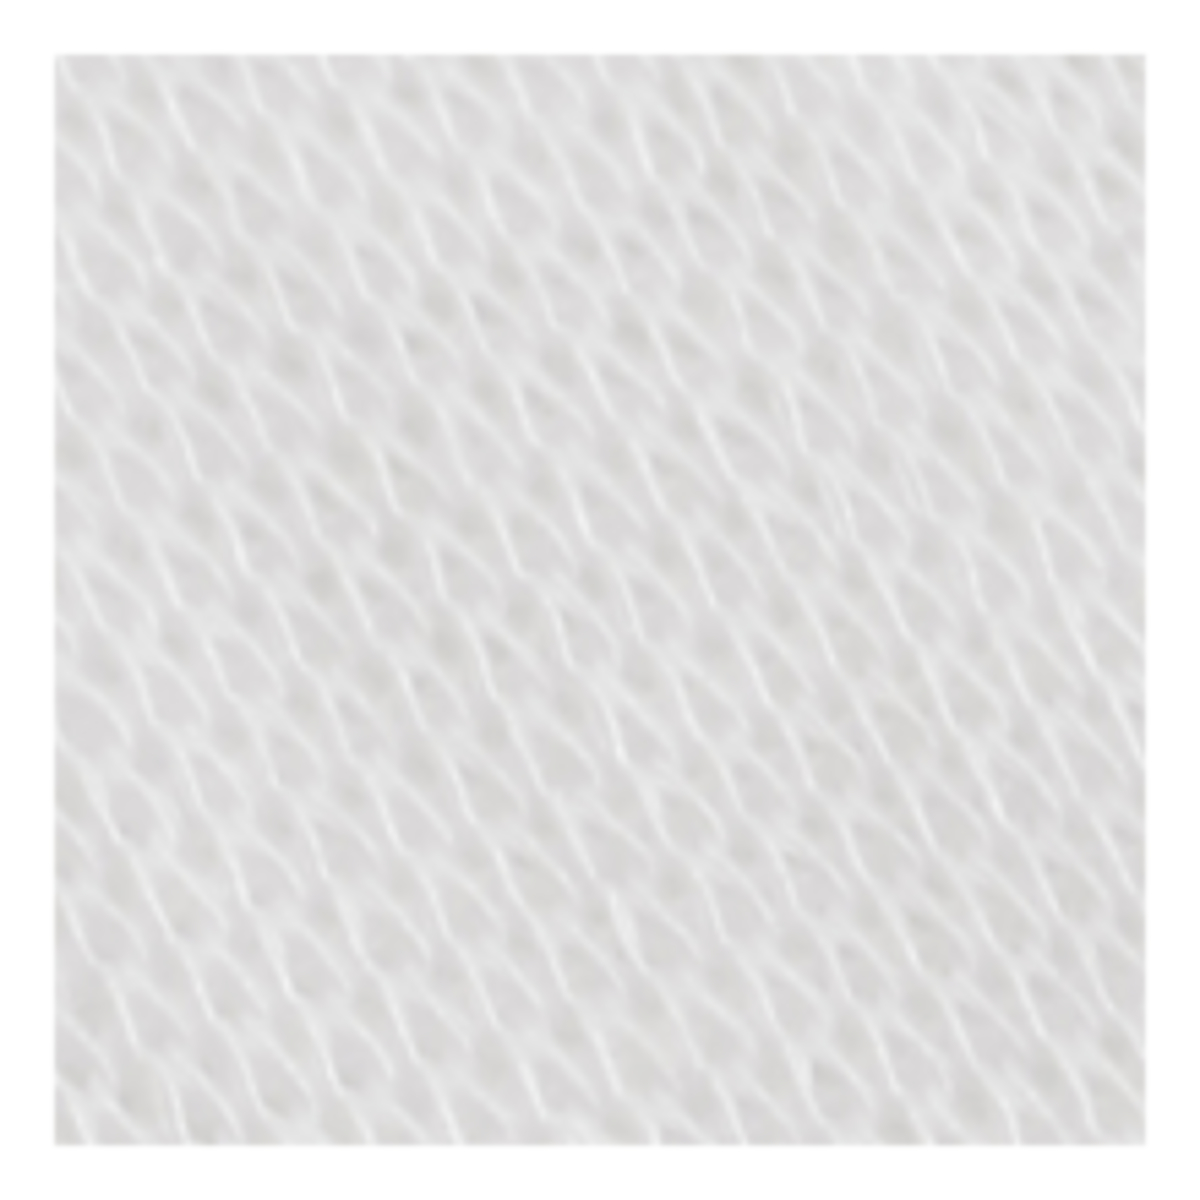 Perlon Stockinette white | Stockinettes | Lamination Technology ...